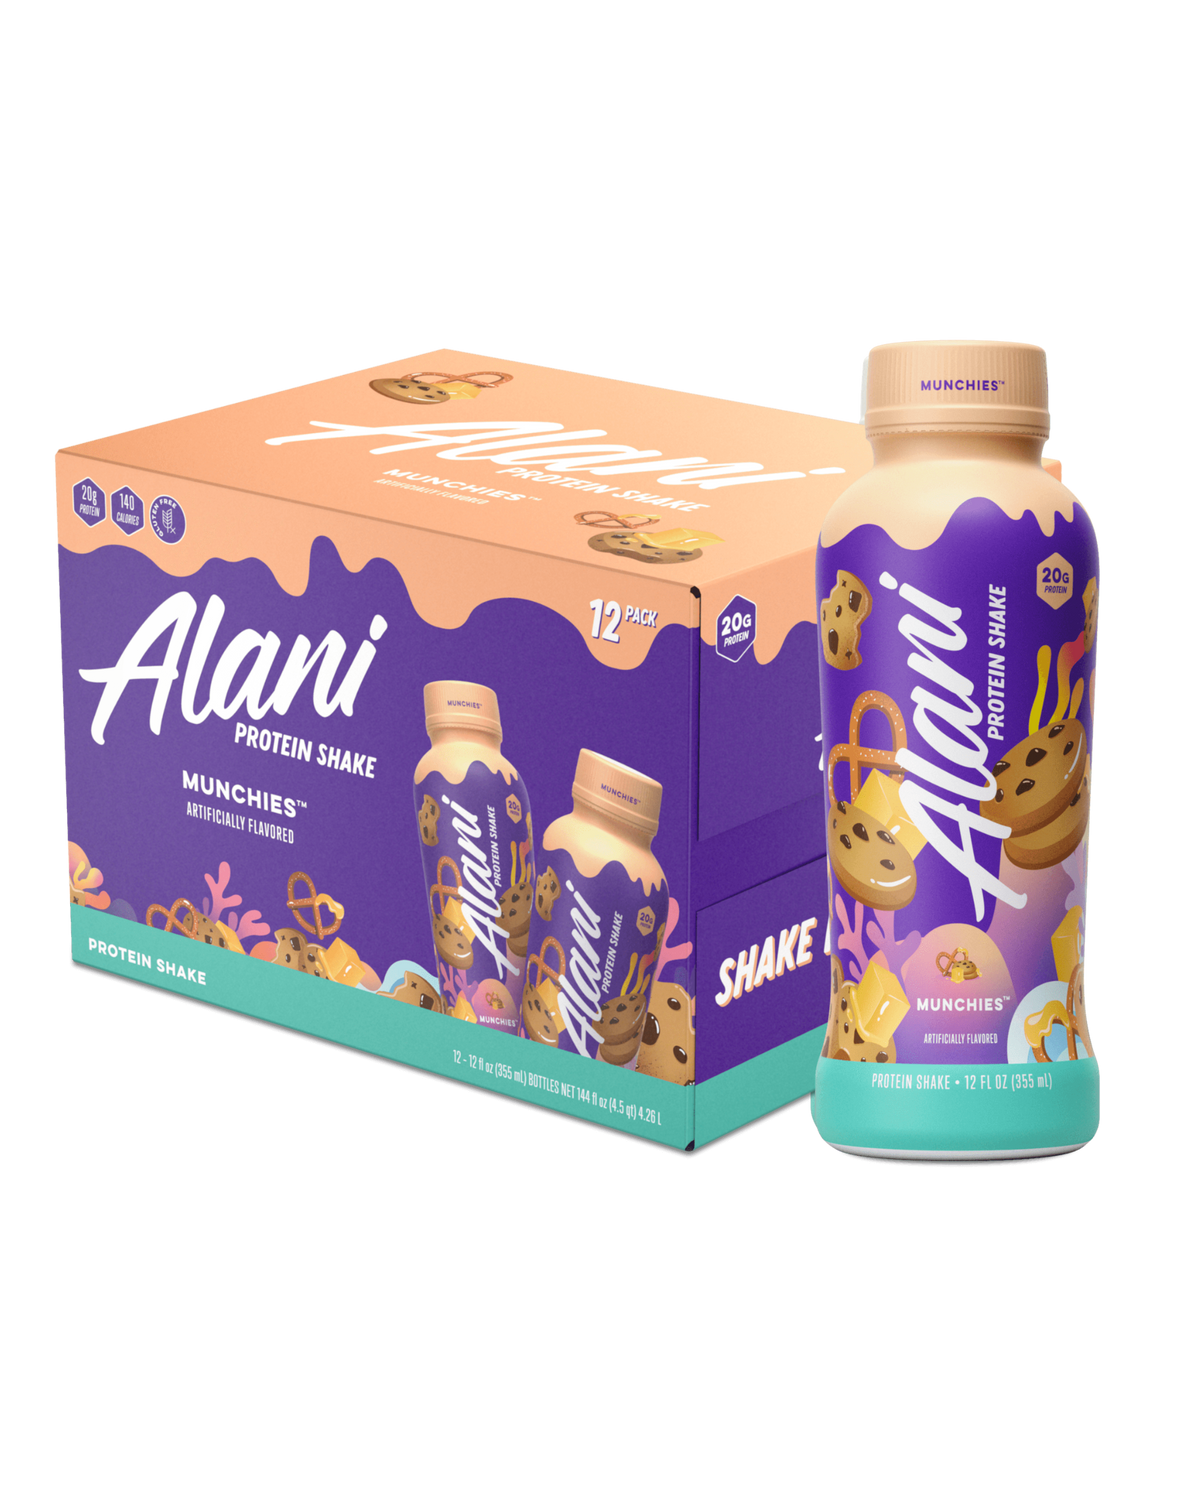 A 12pk of bottles of Alani Nu Protein Shake - Munchies.